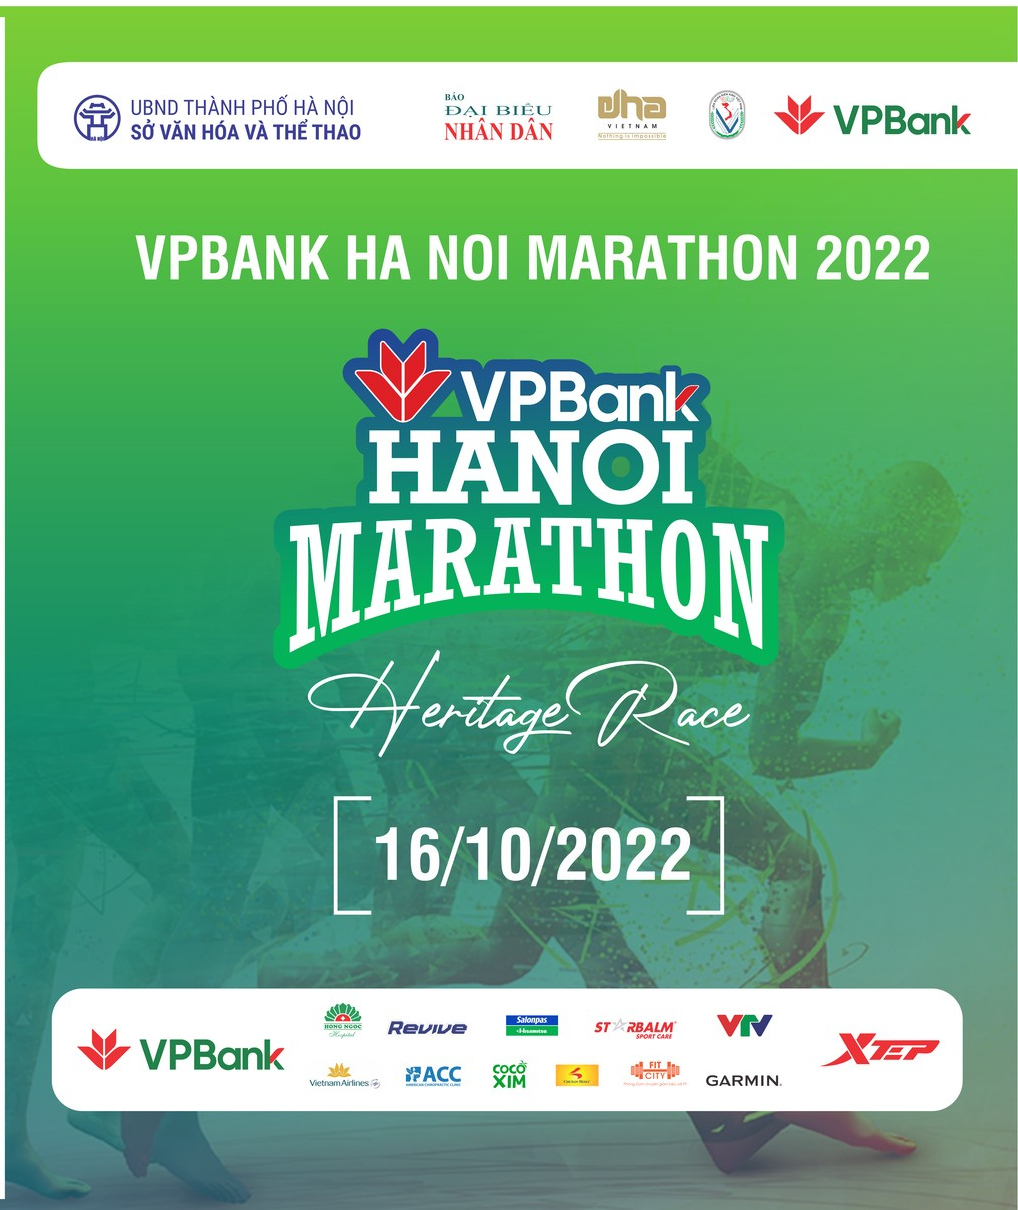 VPBank Hanoi Marathon 2022 Announces Prize Award Details